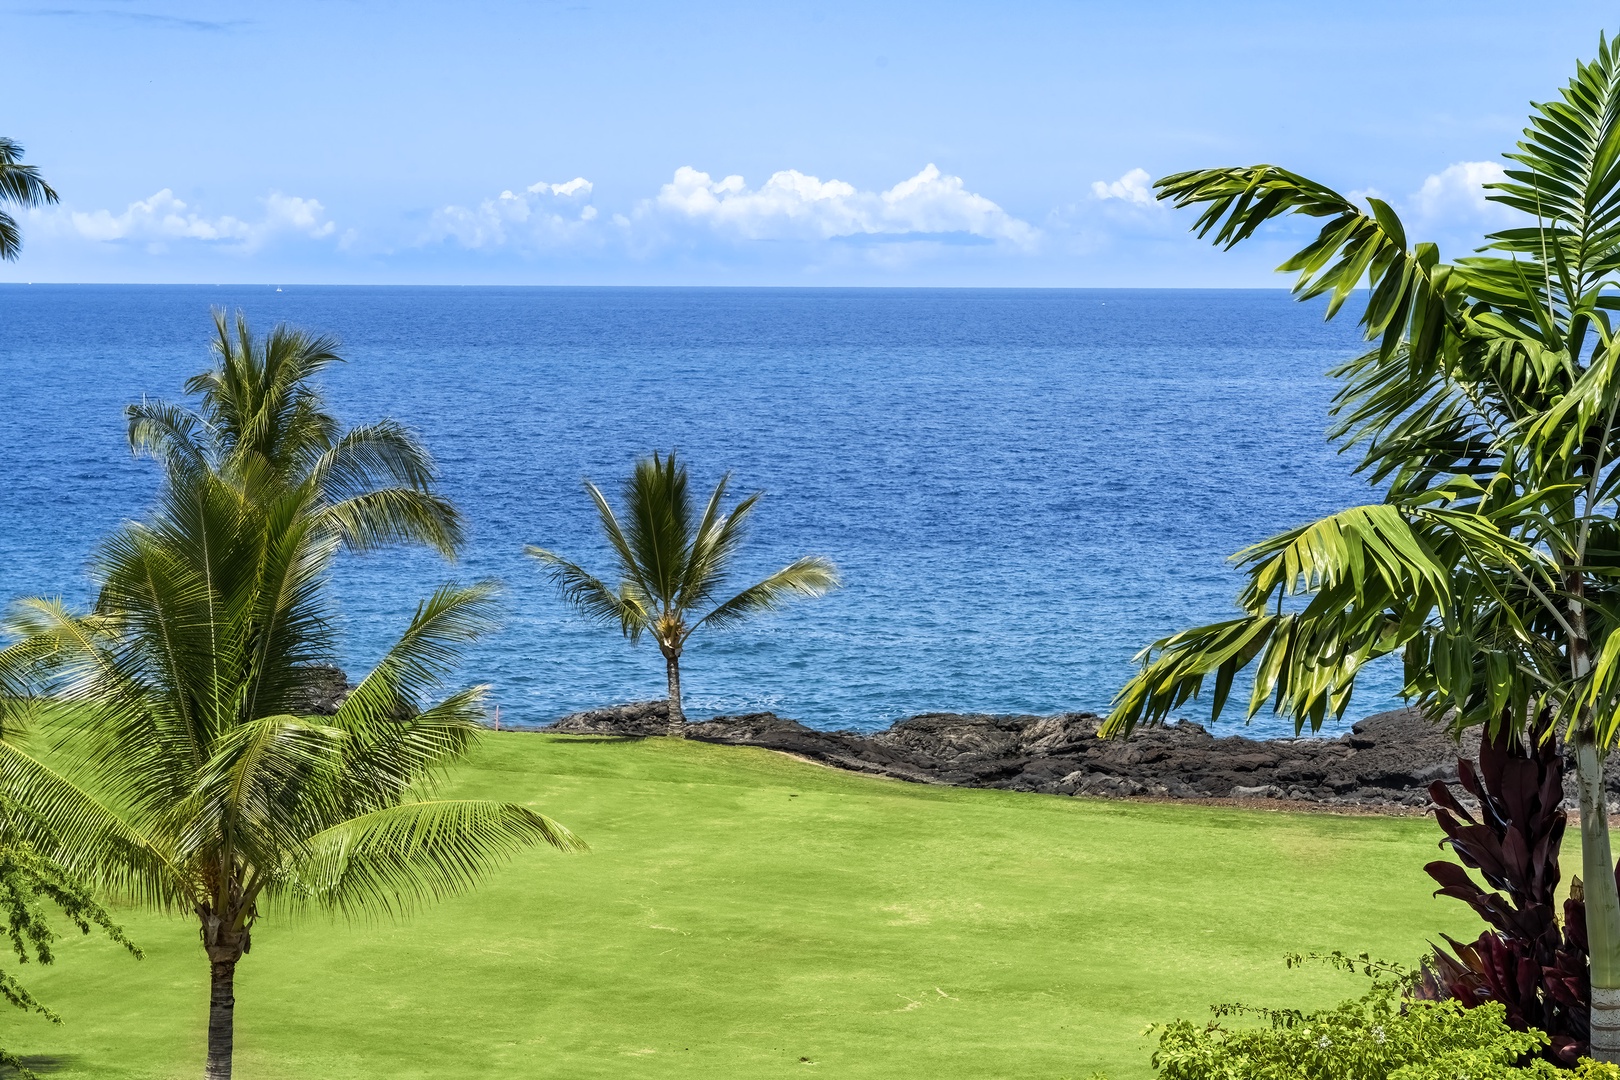 Kailua Kona Vacation Rentals, Green/Blue Combo - Views from the yard of the coastline!